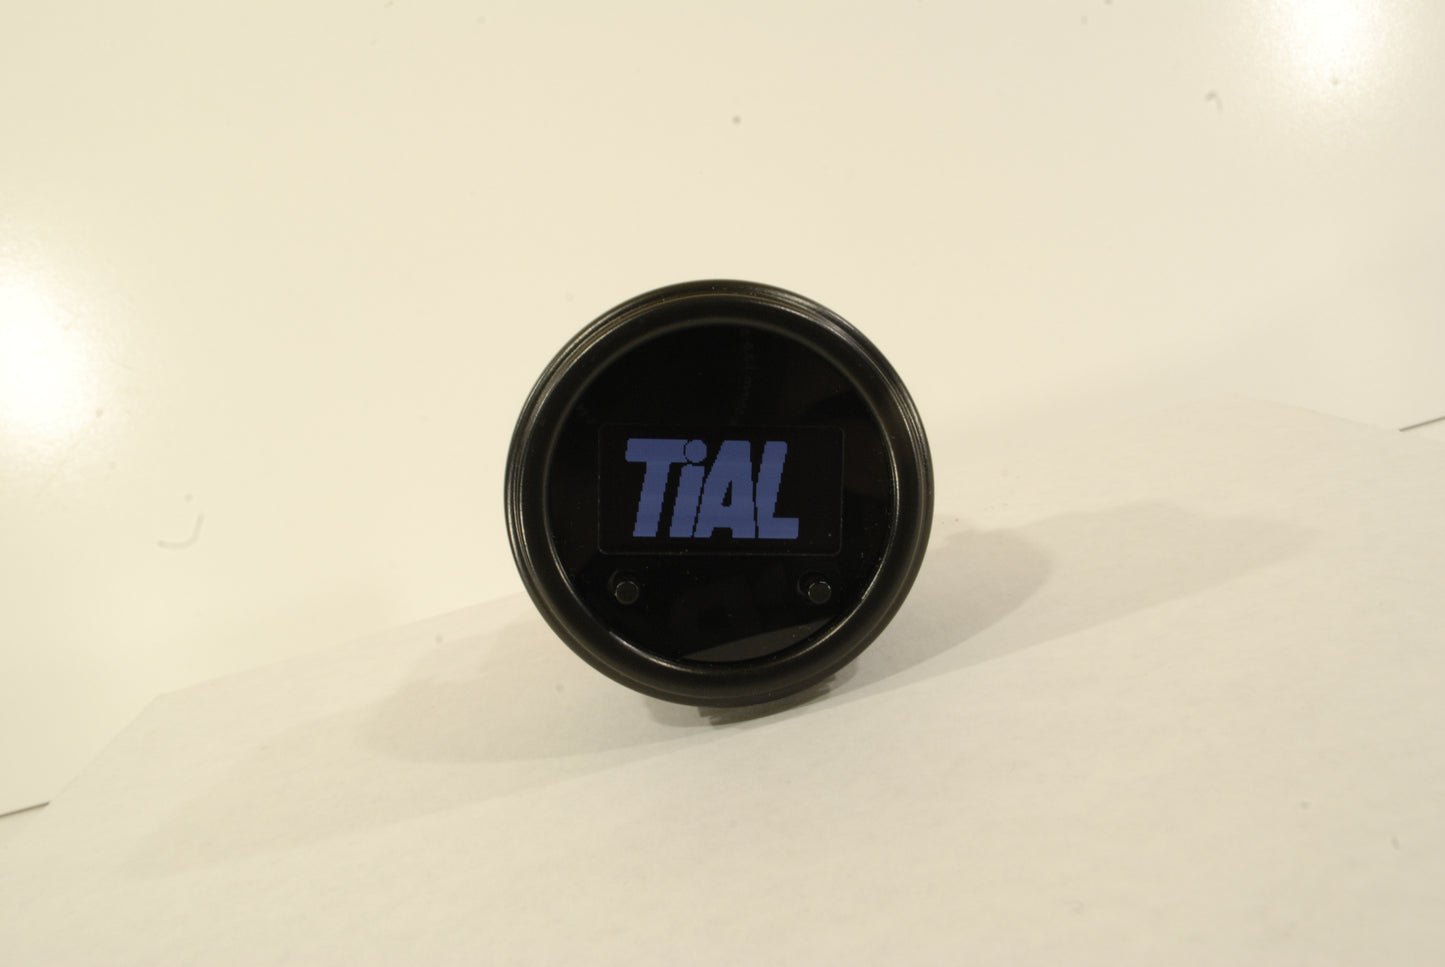 TiALSport TSG-1 Turbine Speed Gauge Kit and Accessories